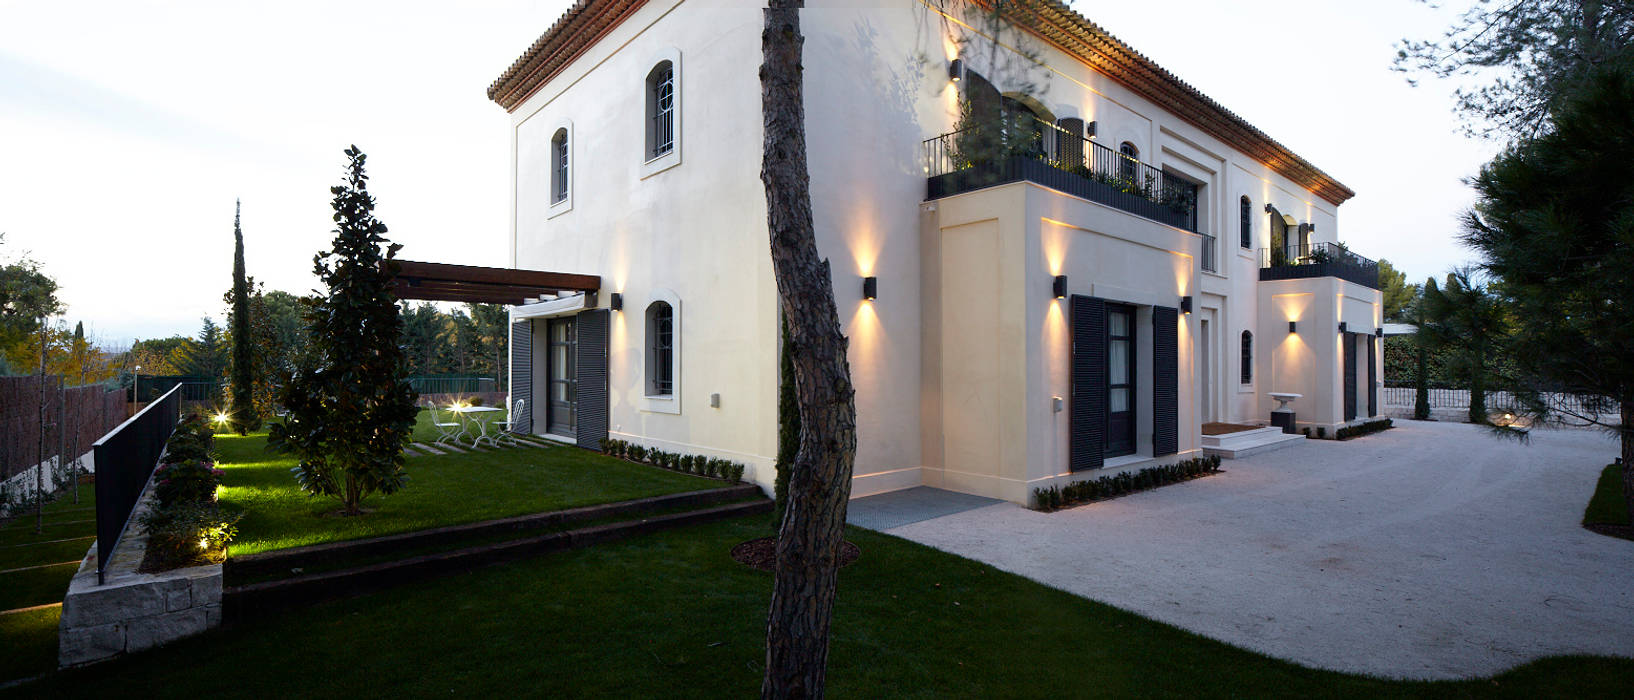 HOUSE IN VALDEMARIN, Serrano Suñer Arquitectura Serrano Suñer Arquitectura Casas de estilo clásico